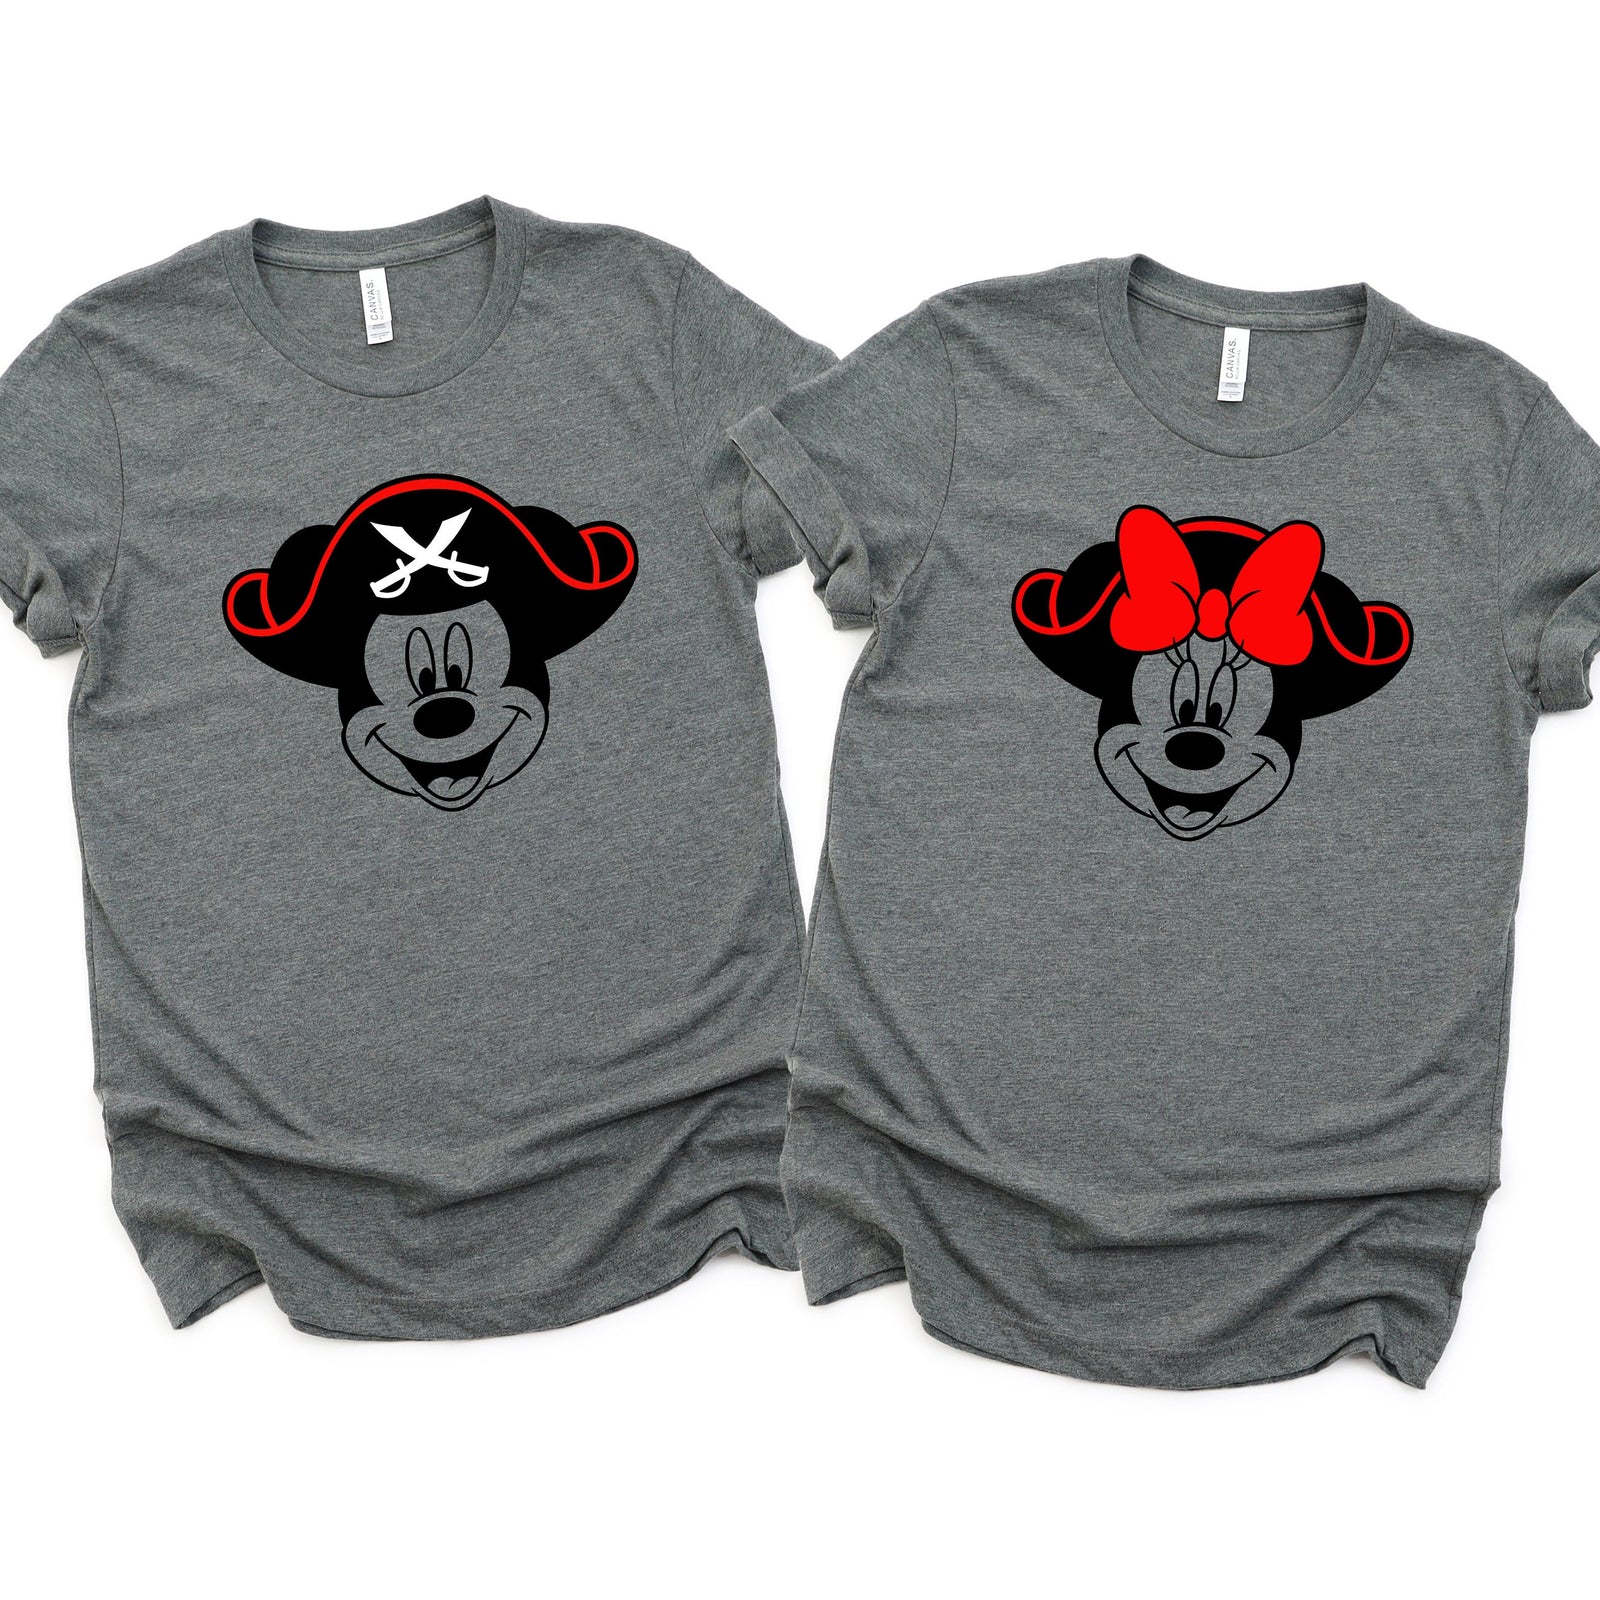 Pirate Minnie and Mickey Shirts - Disney Couples Shirt - Matching Disney Cruise Shirts - Pirate Hat